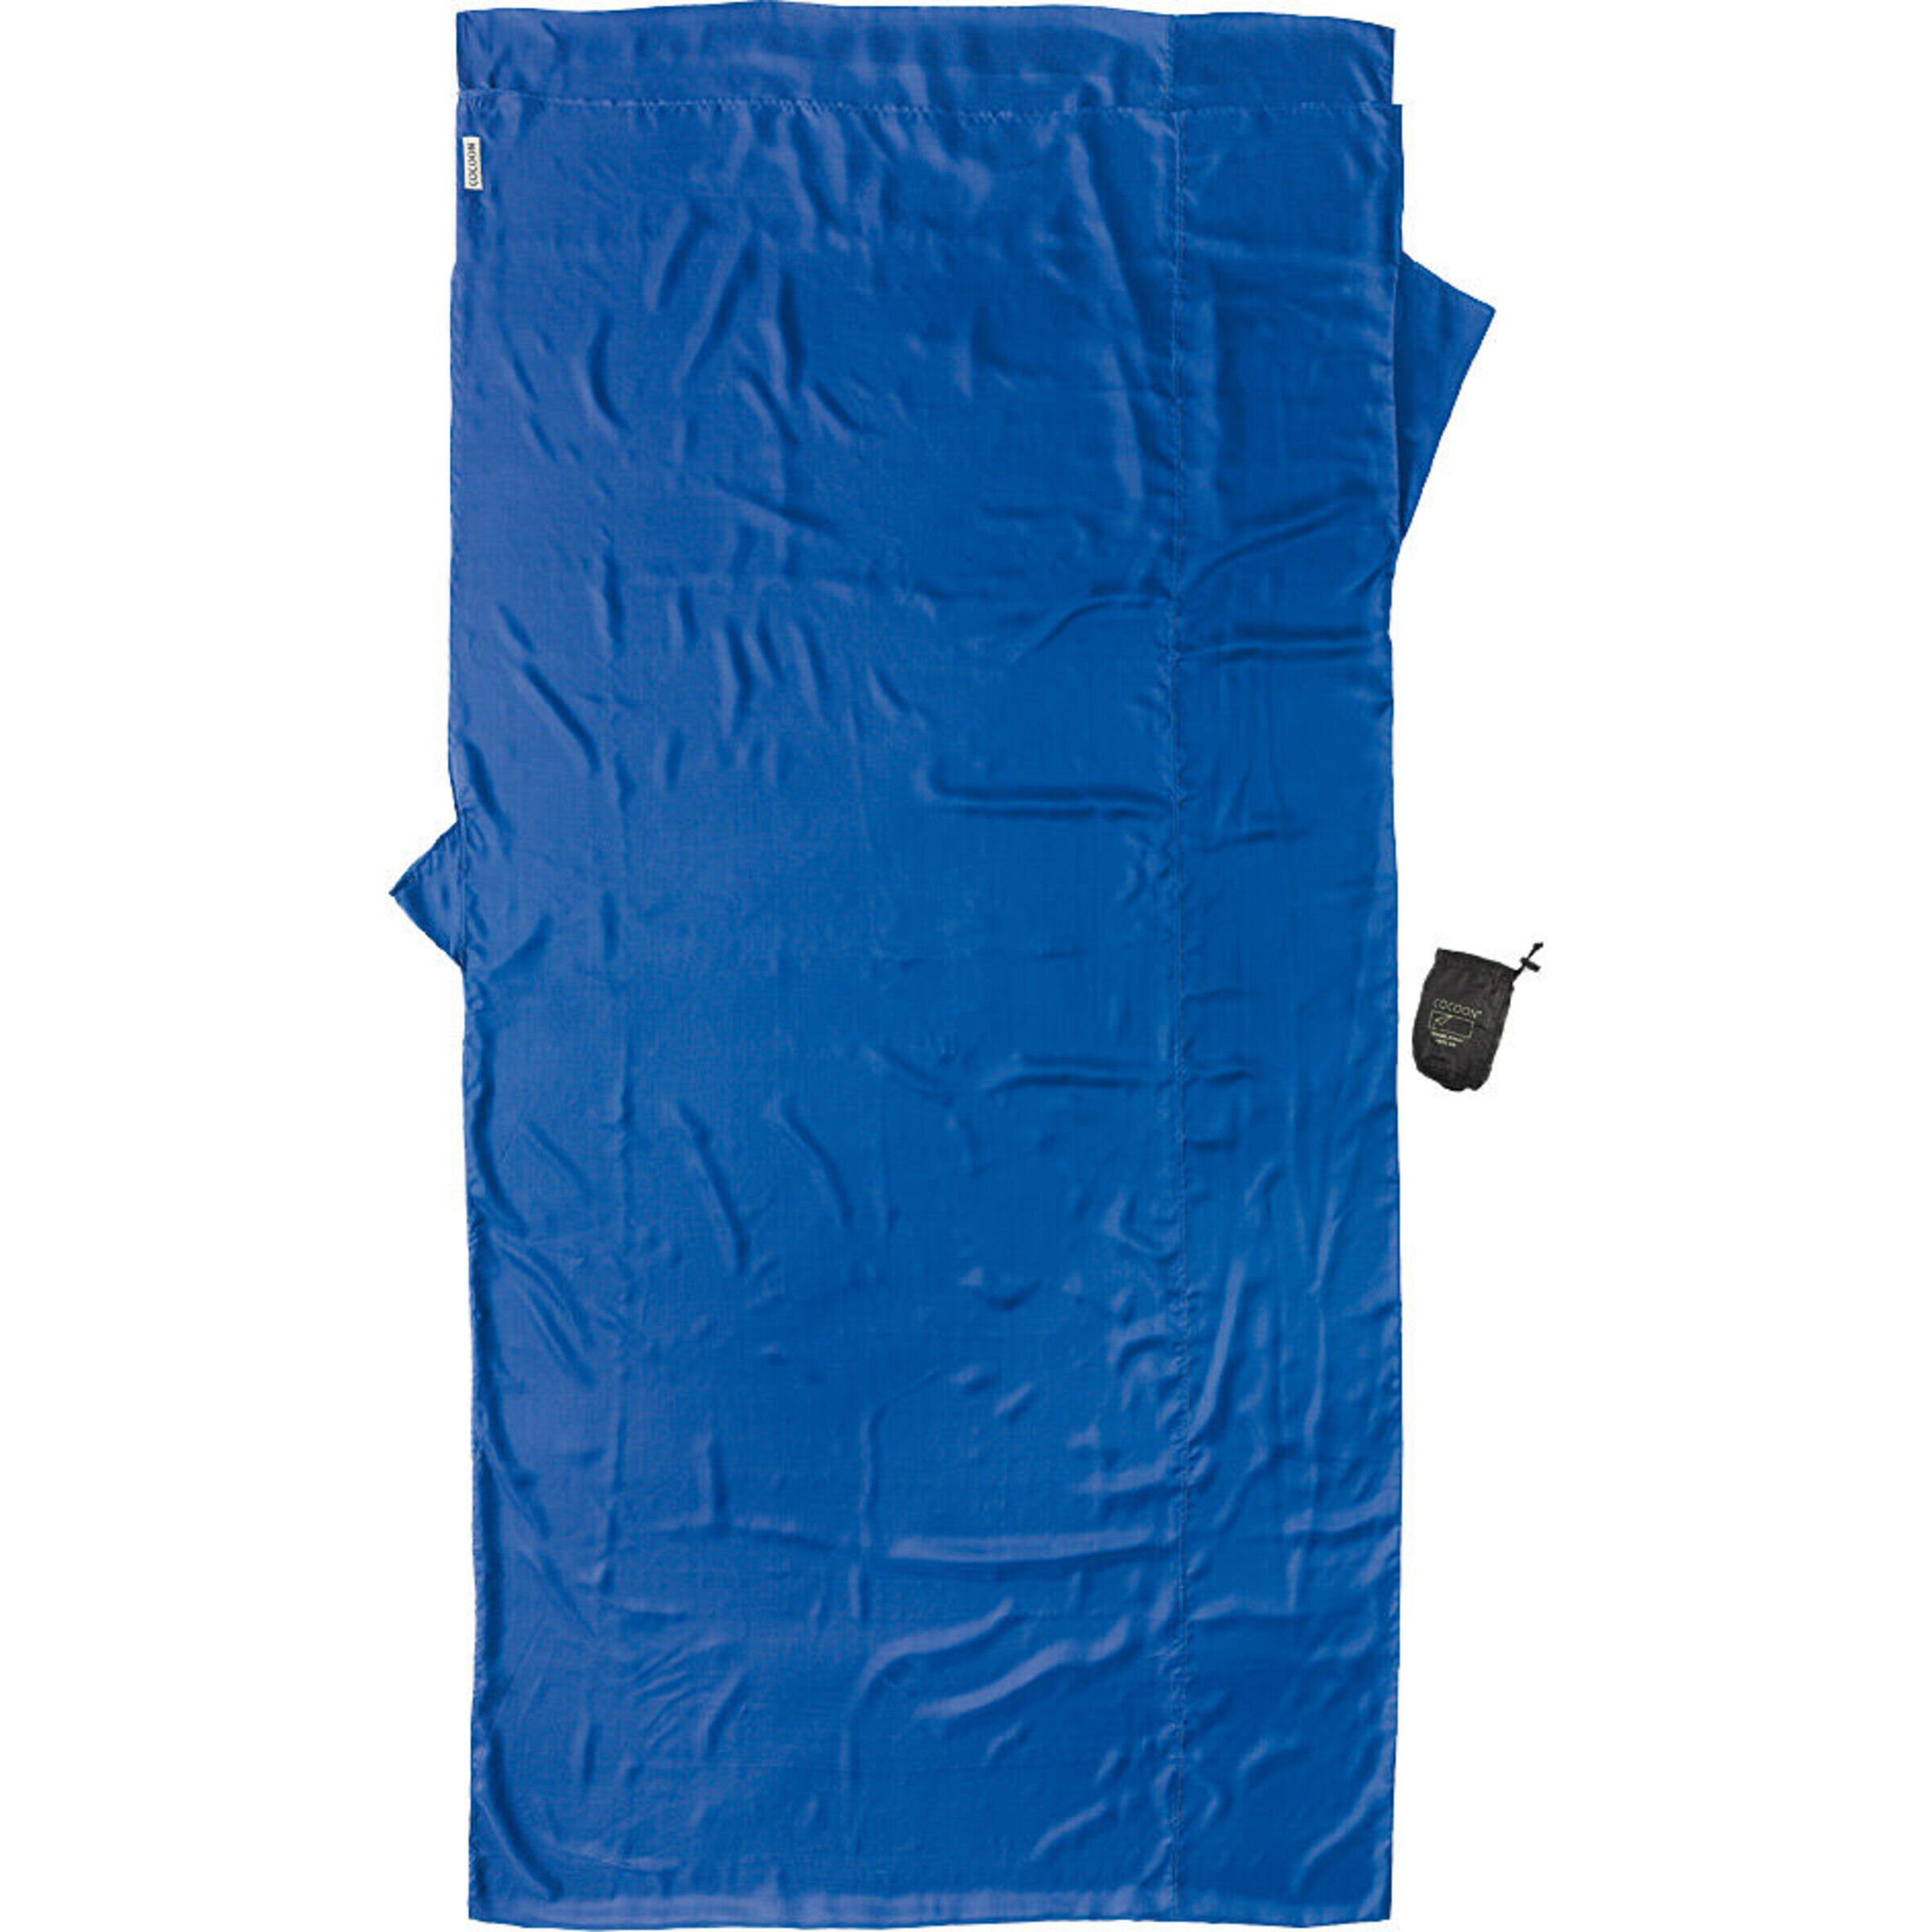 Cocoon Silk TravelSheet - Sleeping bag liner